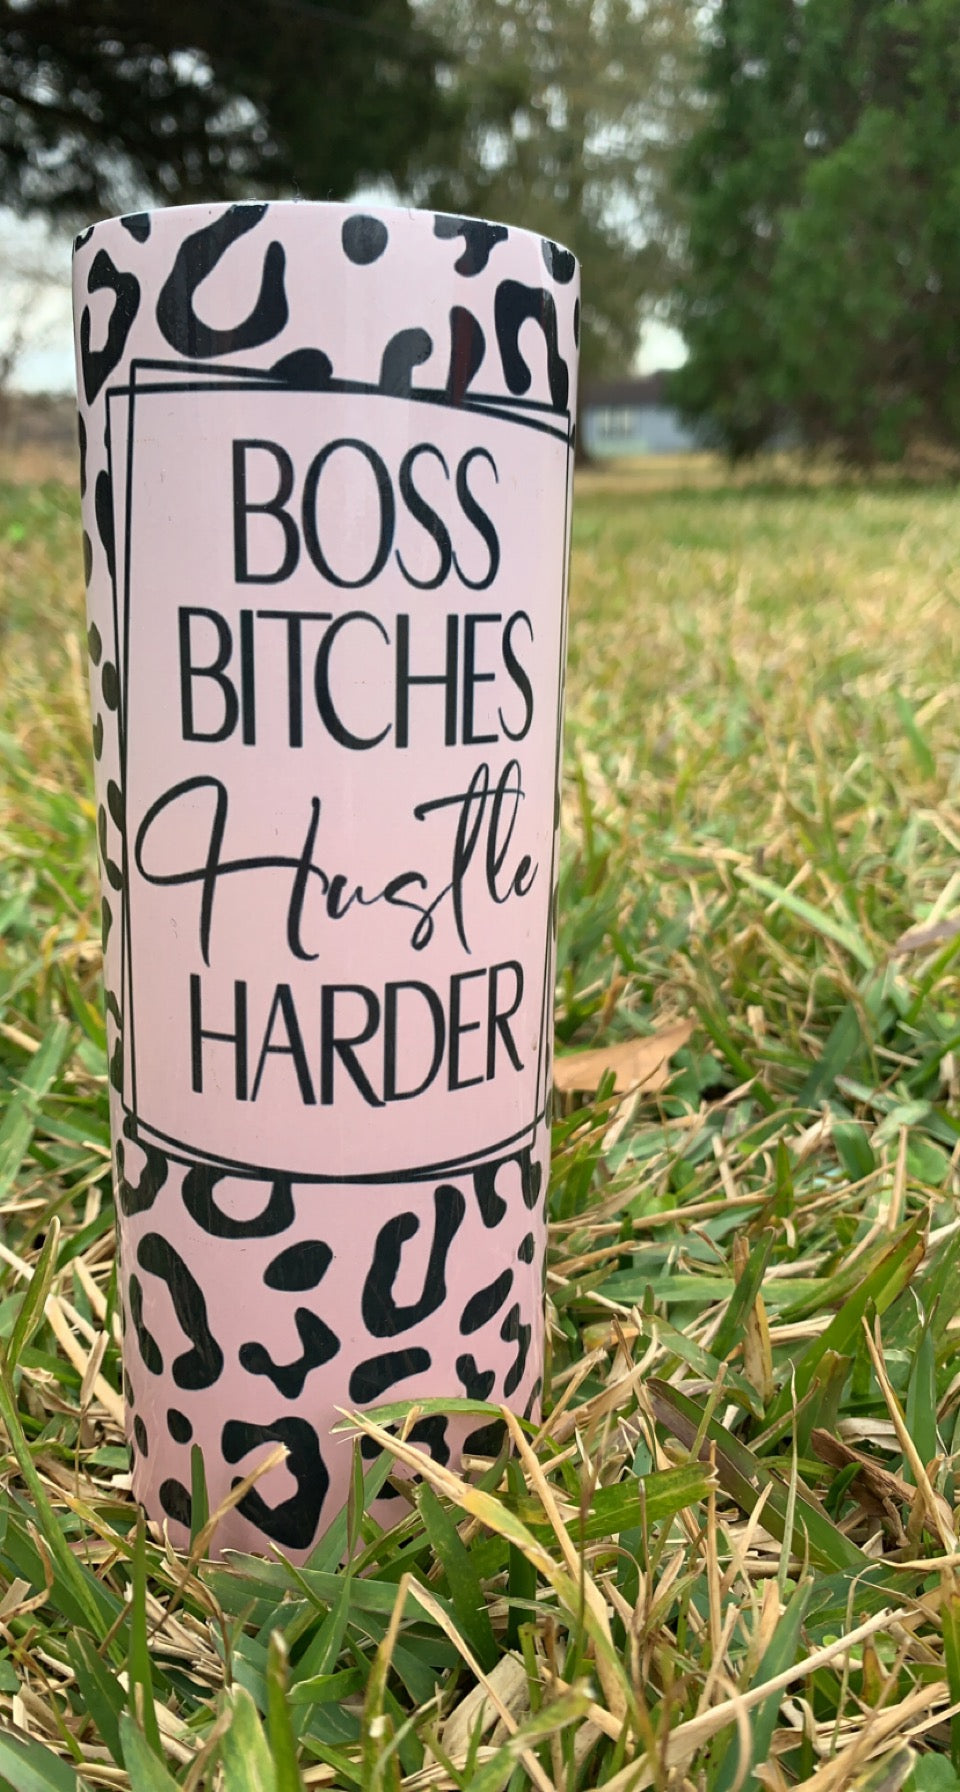 Boss bitches hustle harder